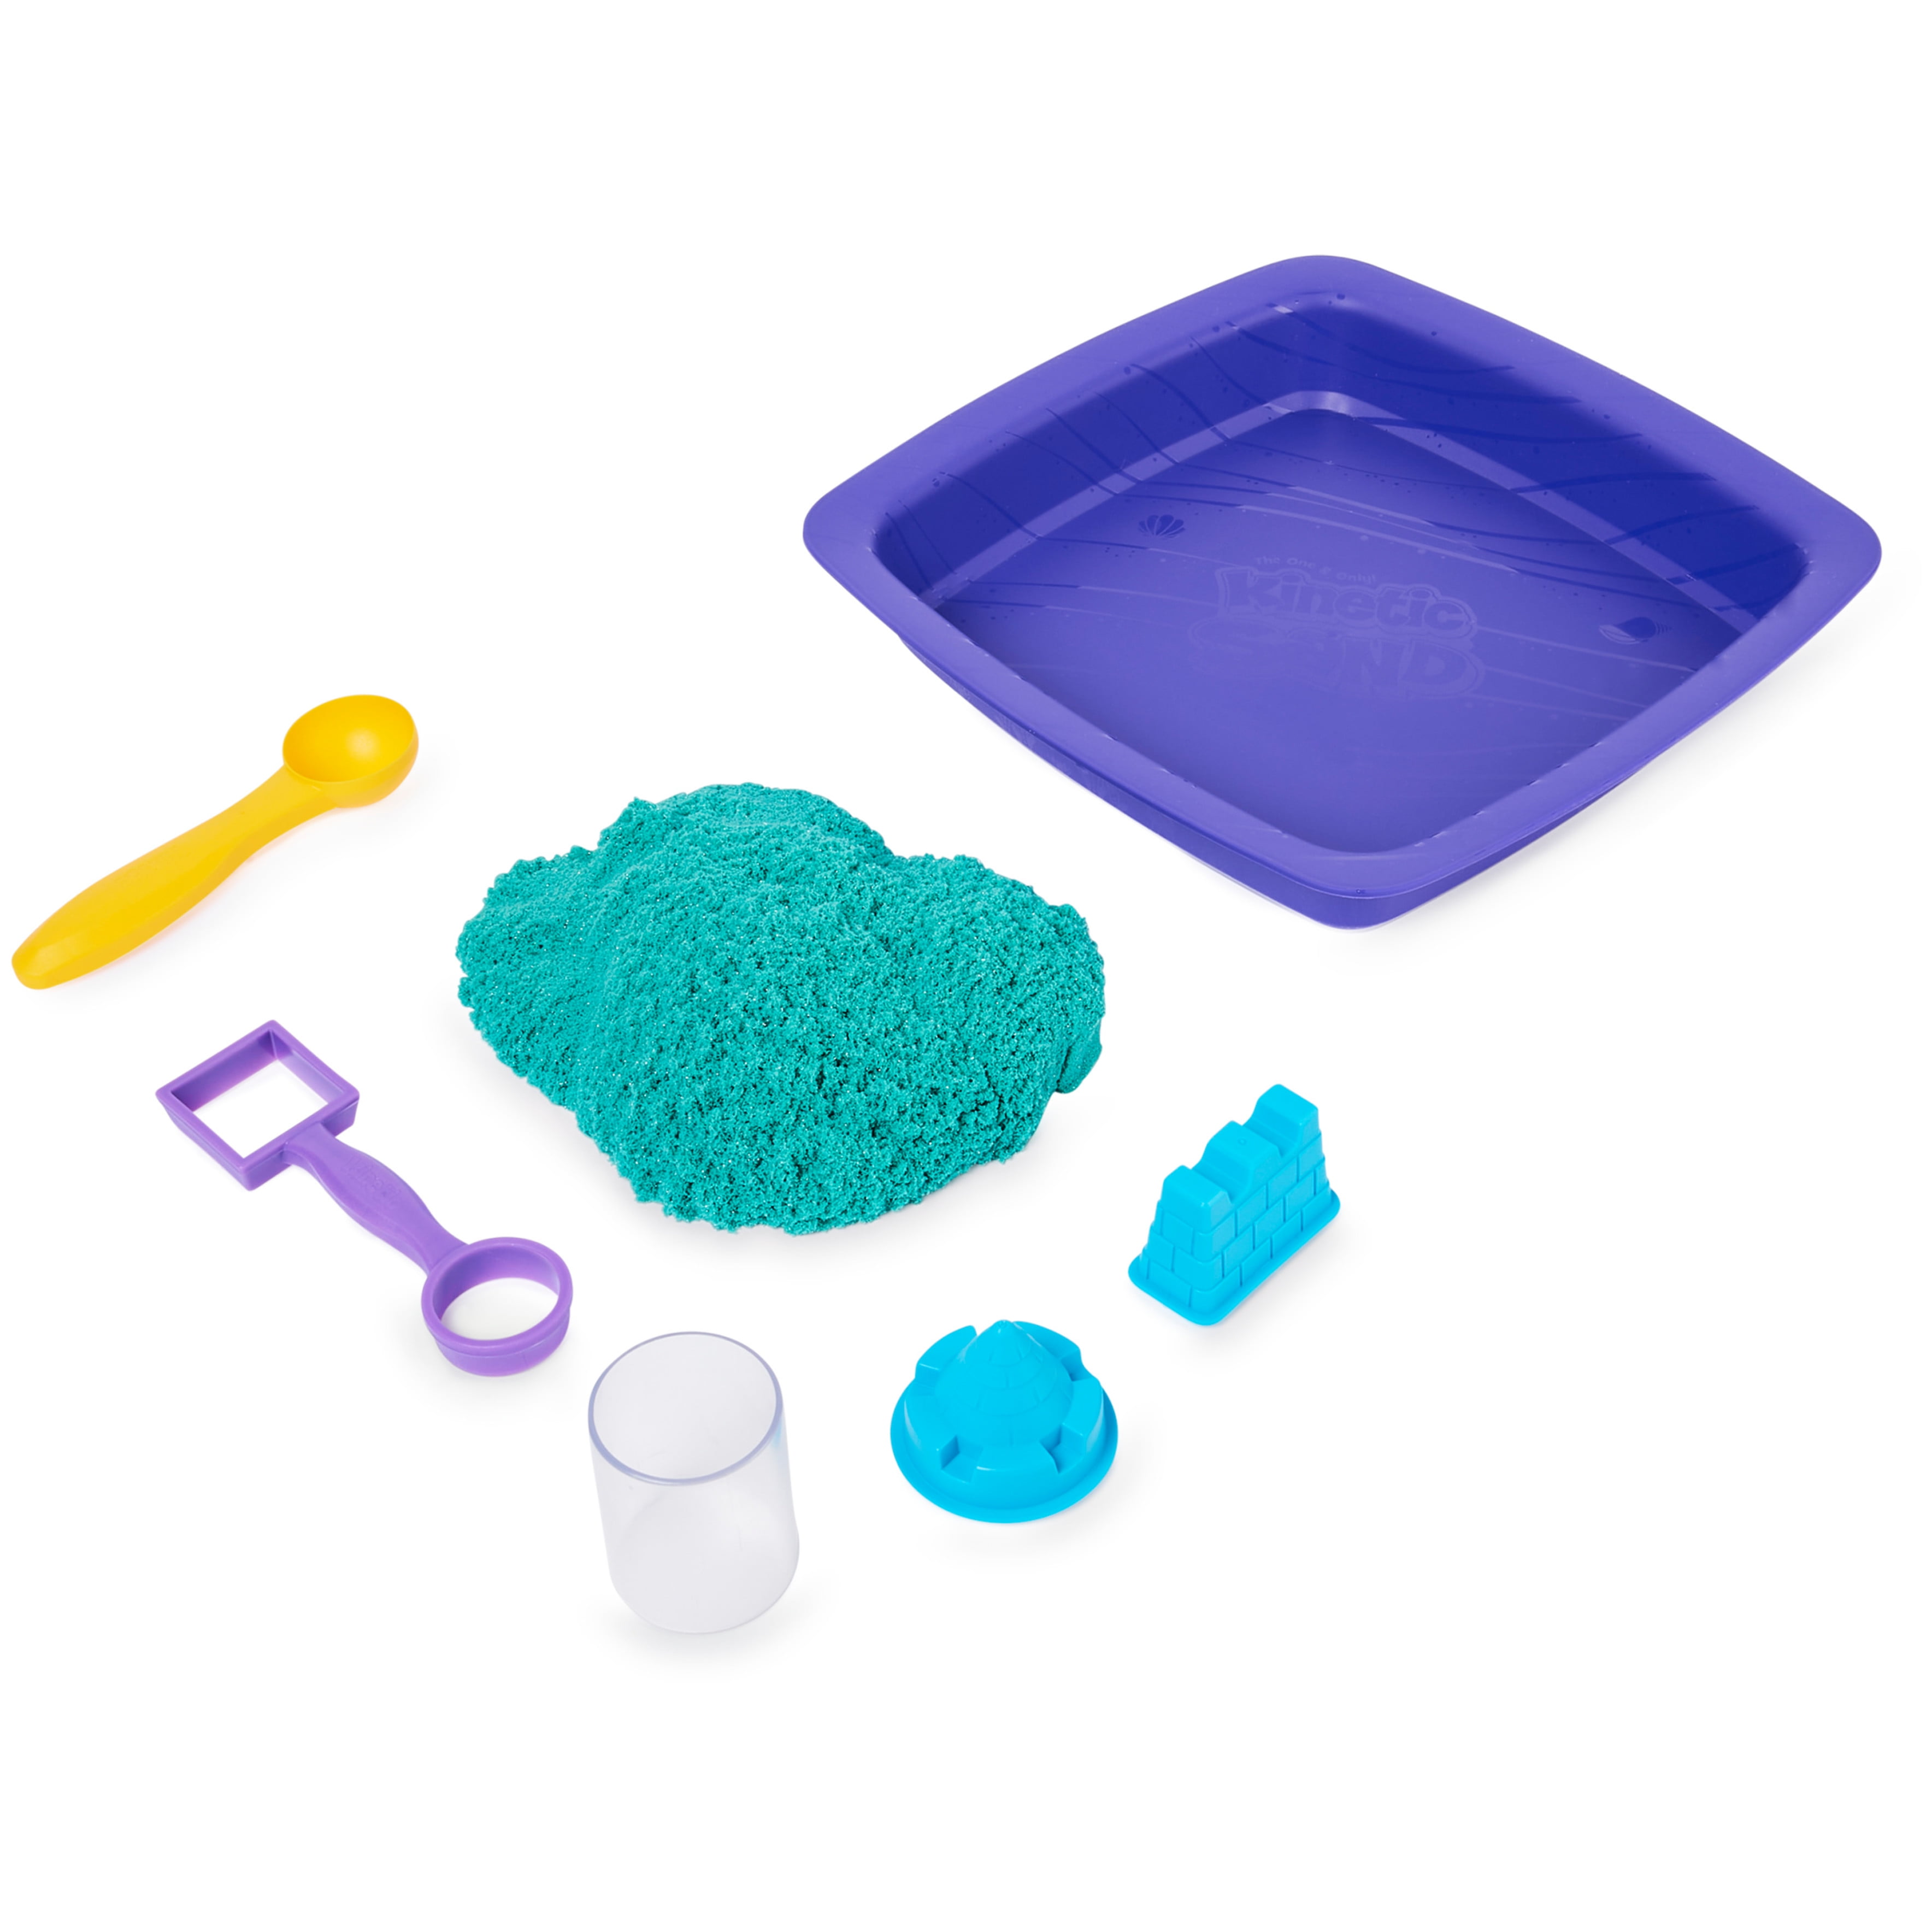 Kinetic Sandcastle Set 3 Molds 1 Tool Sand box & Over 1lb Kinetic Sand Blue  &Prp